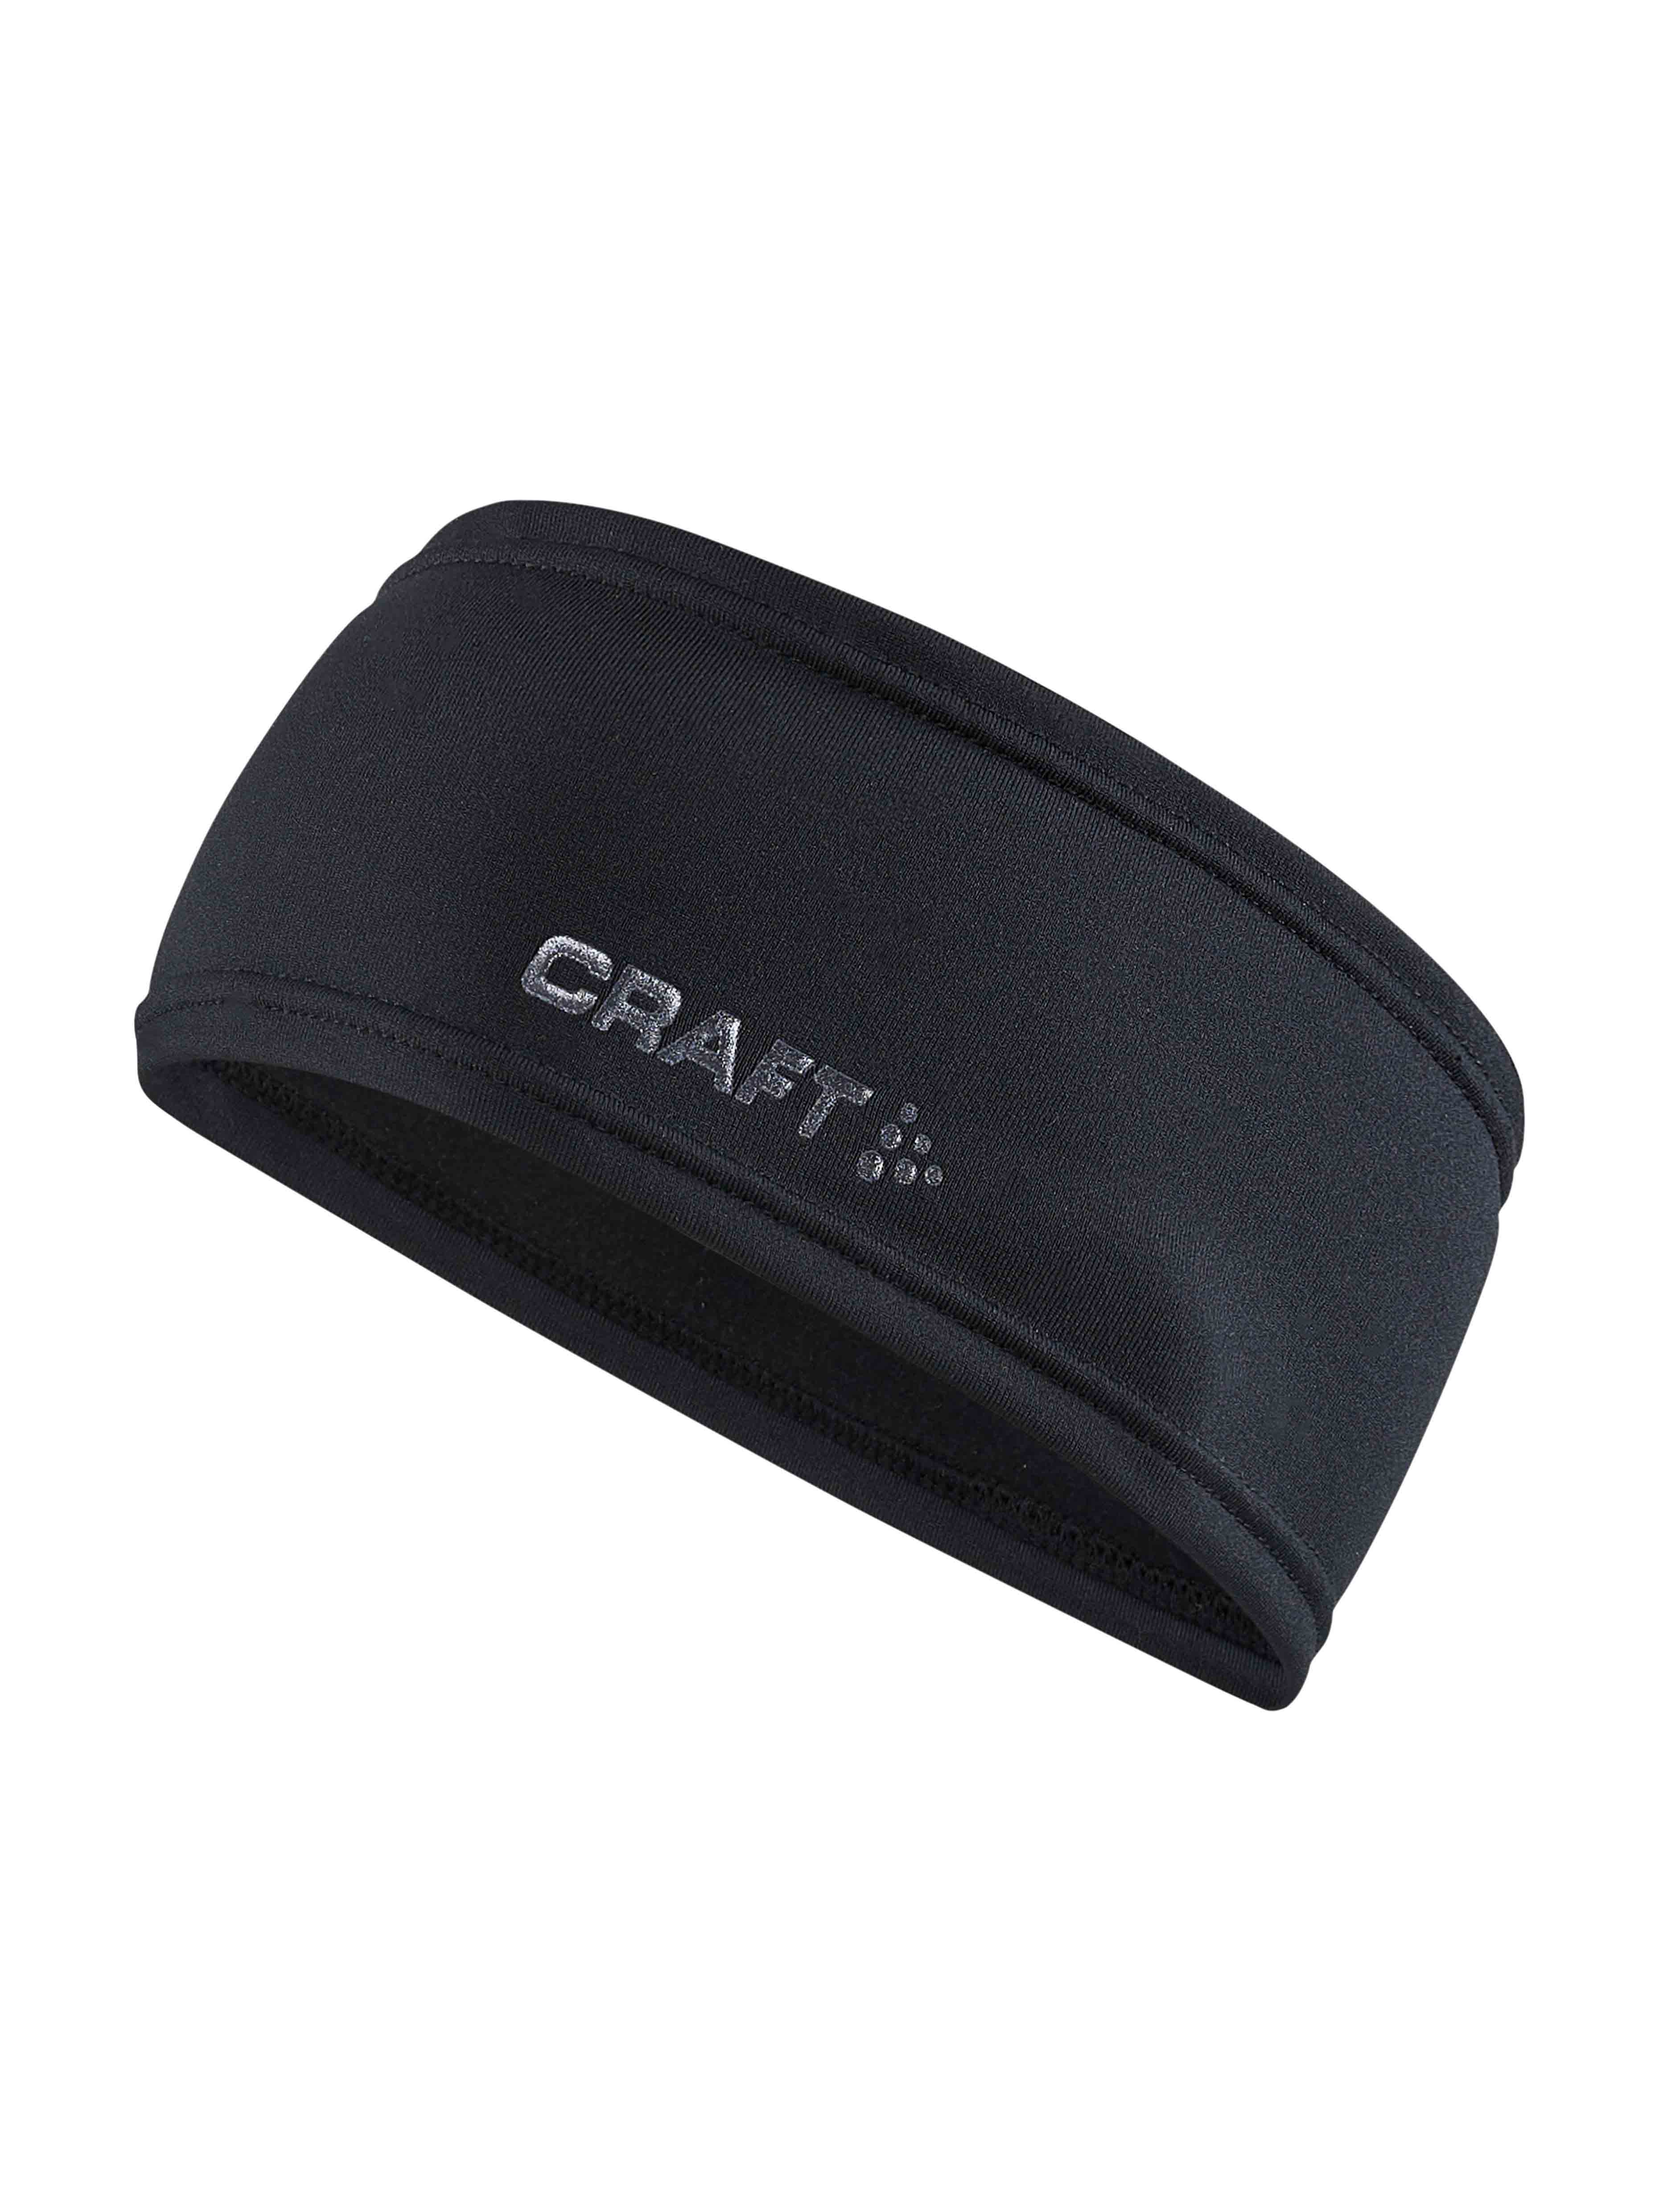 Core Essence Thermal Headband BLACK